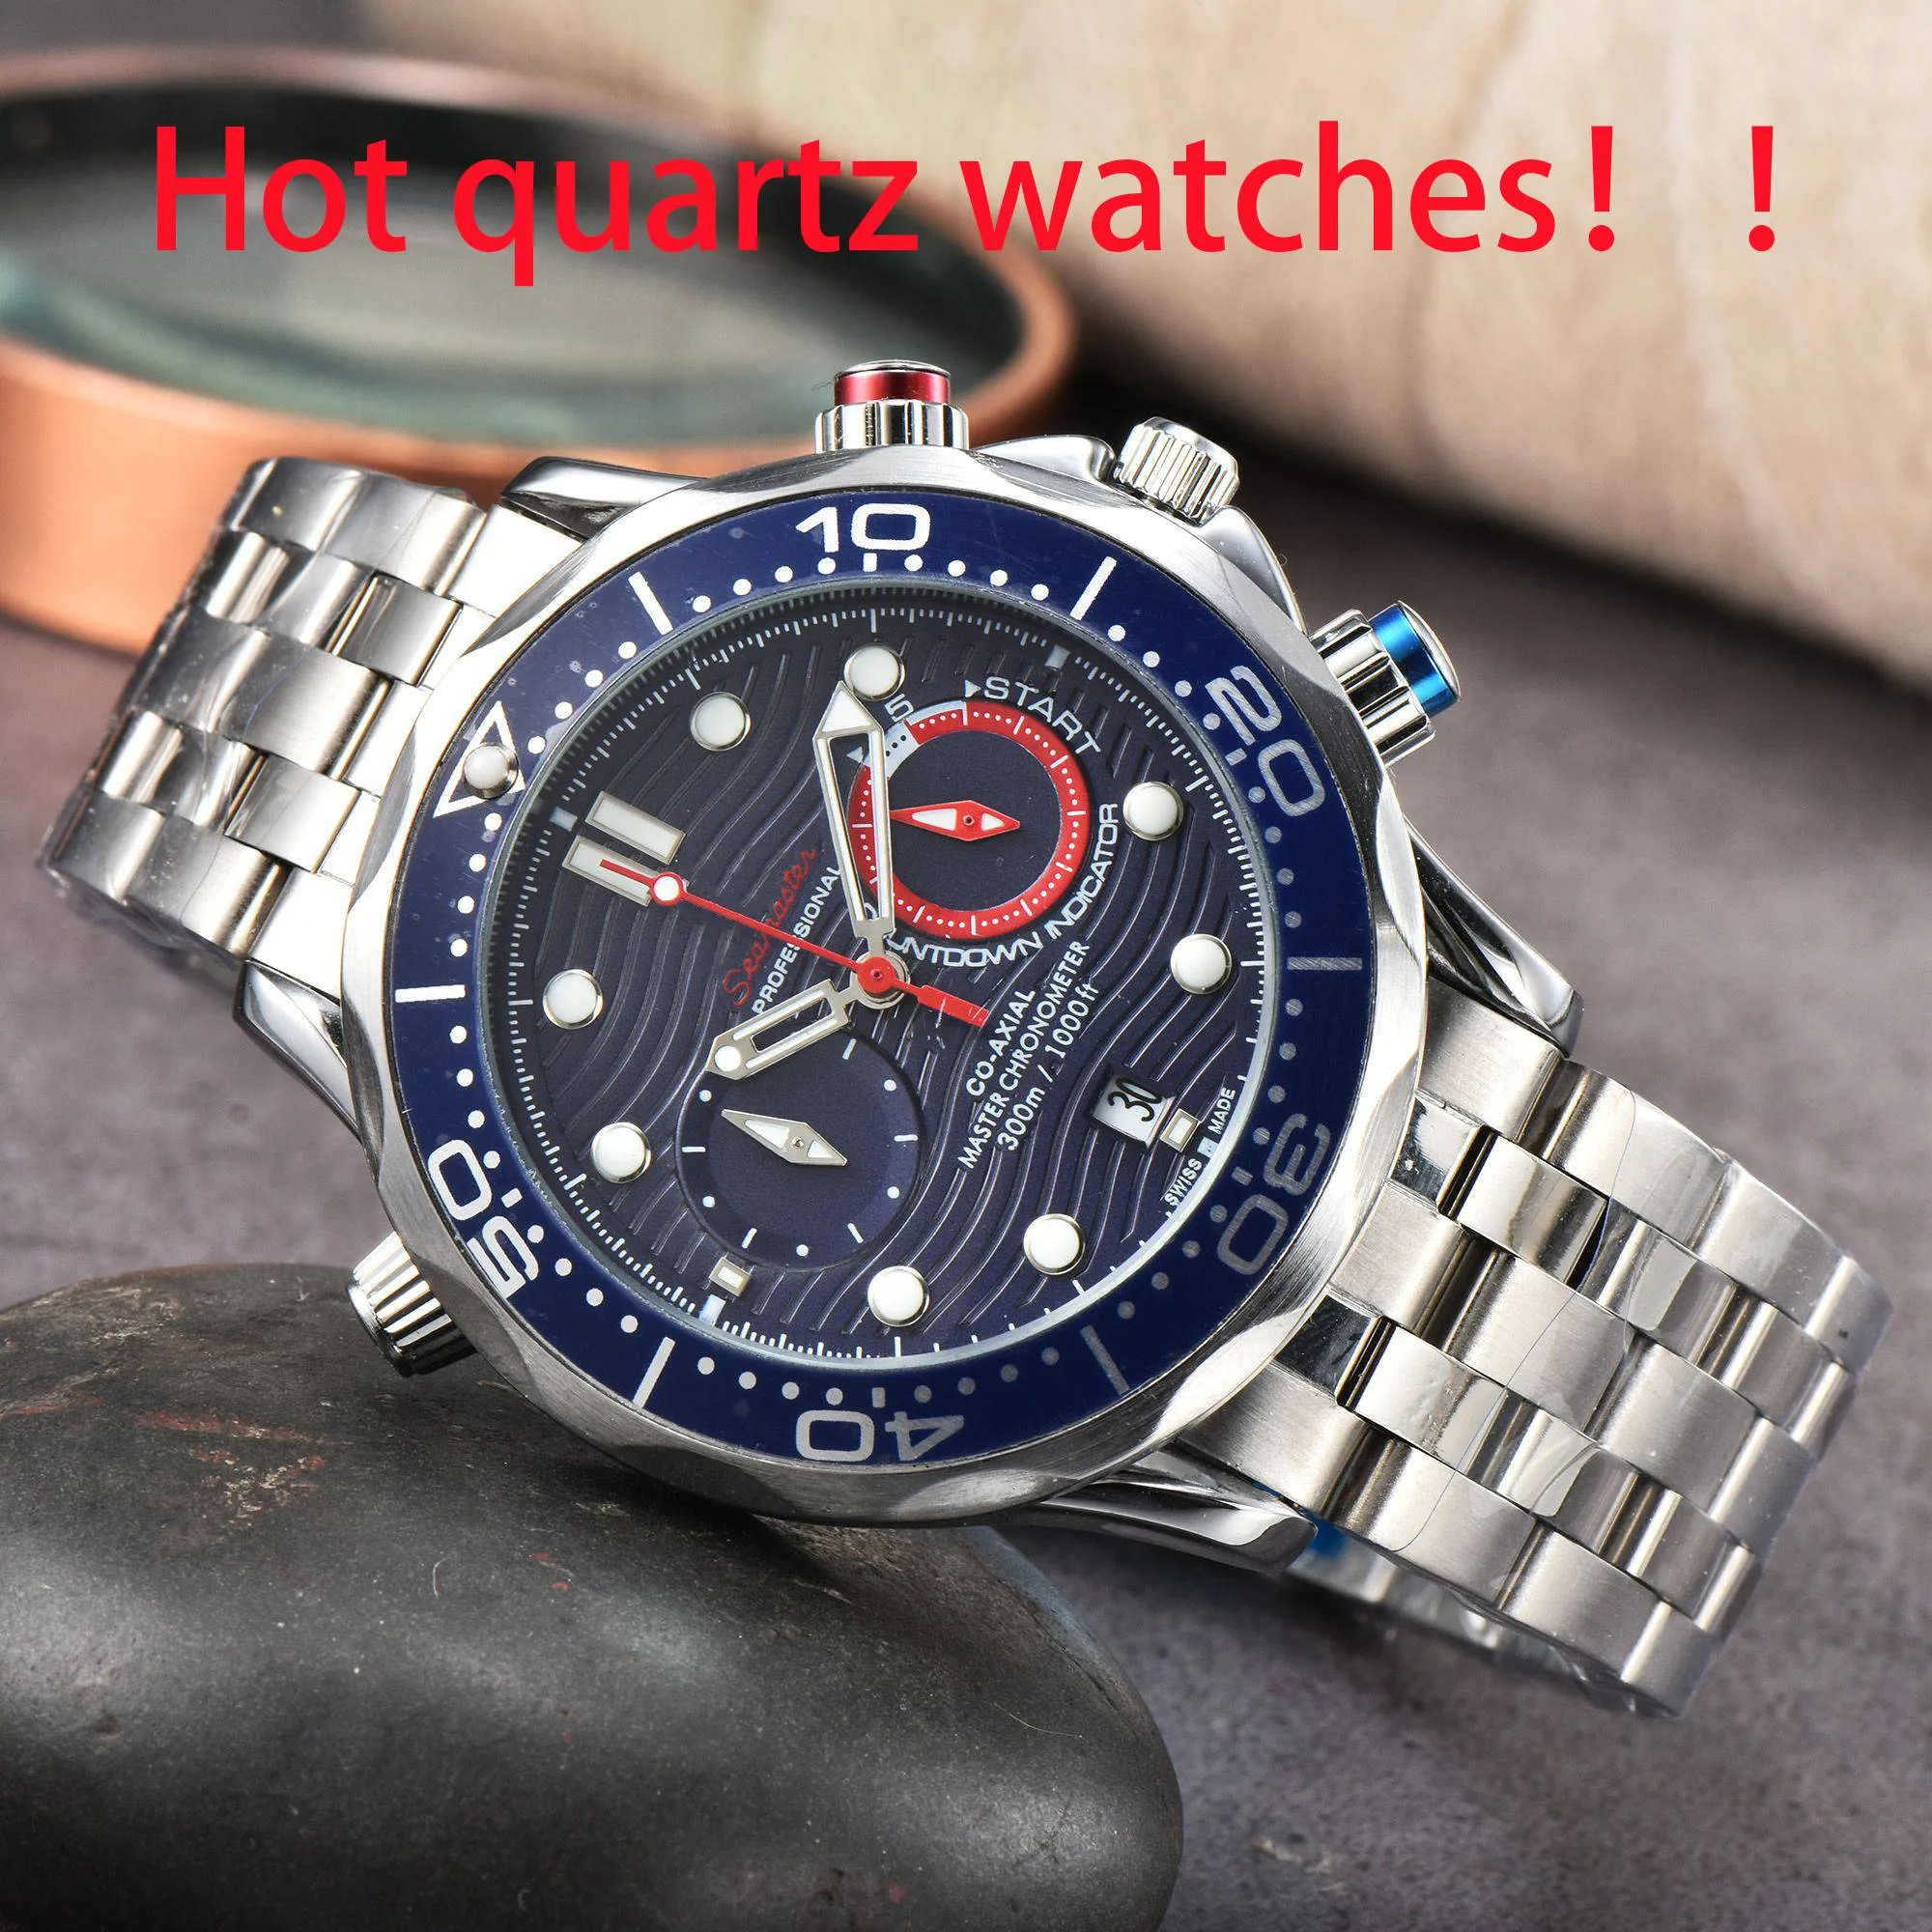 Hot OMG Mens Luxury Sports Watches Designer Brand Watch Classic Dial Quartz Wrist Watches Men Fashion Silicone Strap